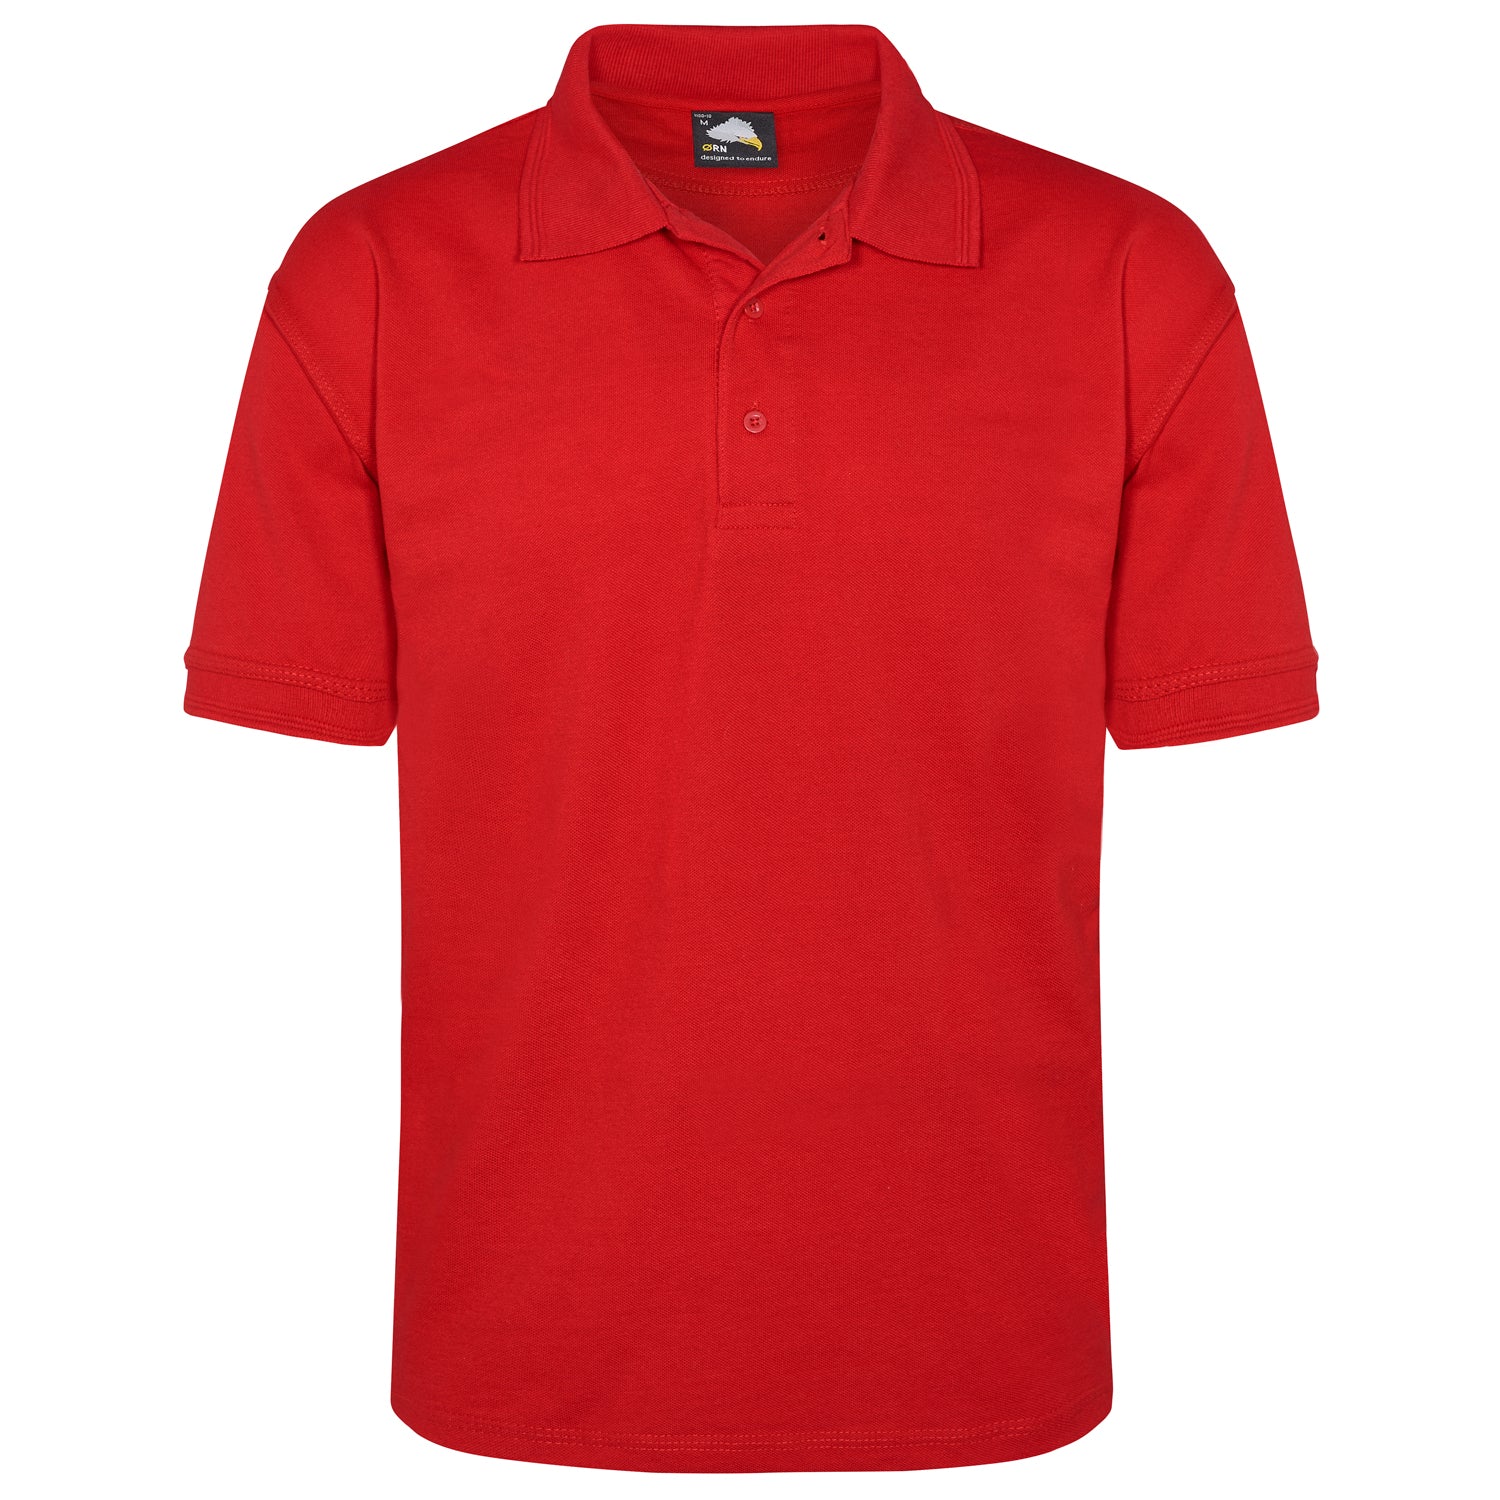 ORN Eagle Poloshirt - Red